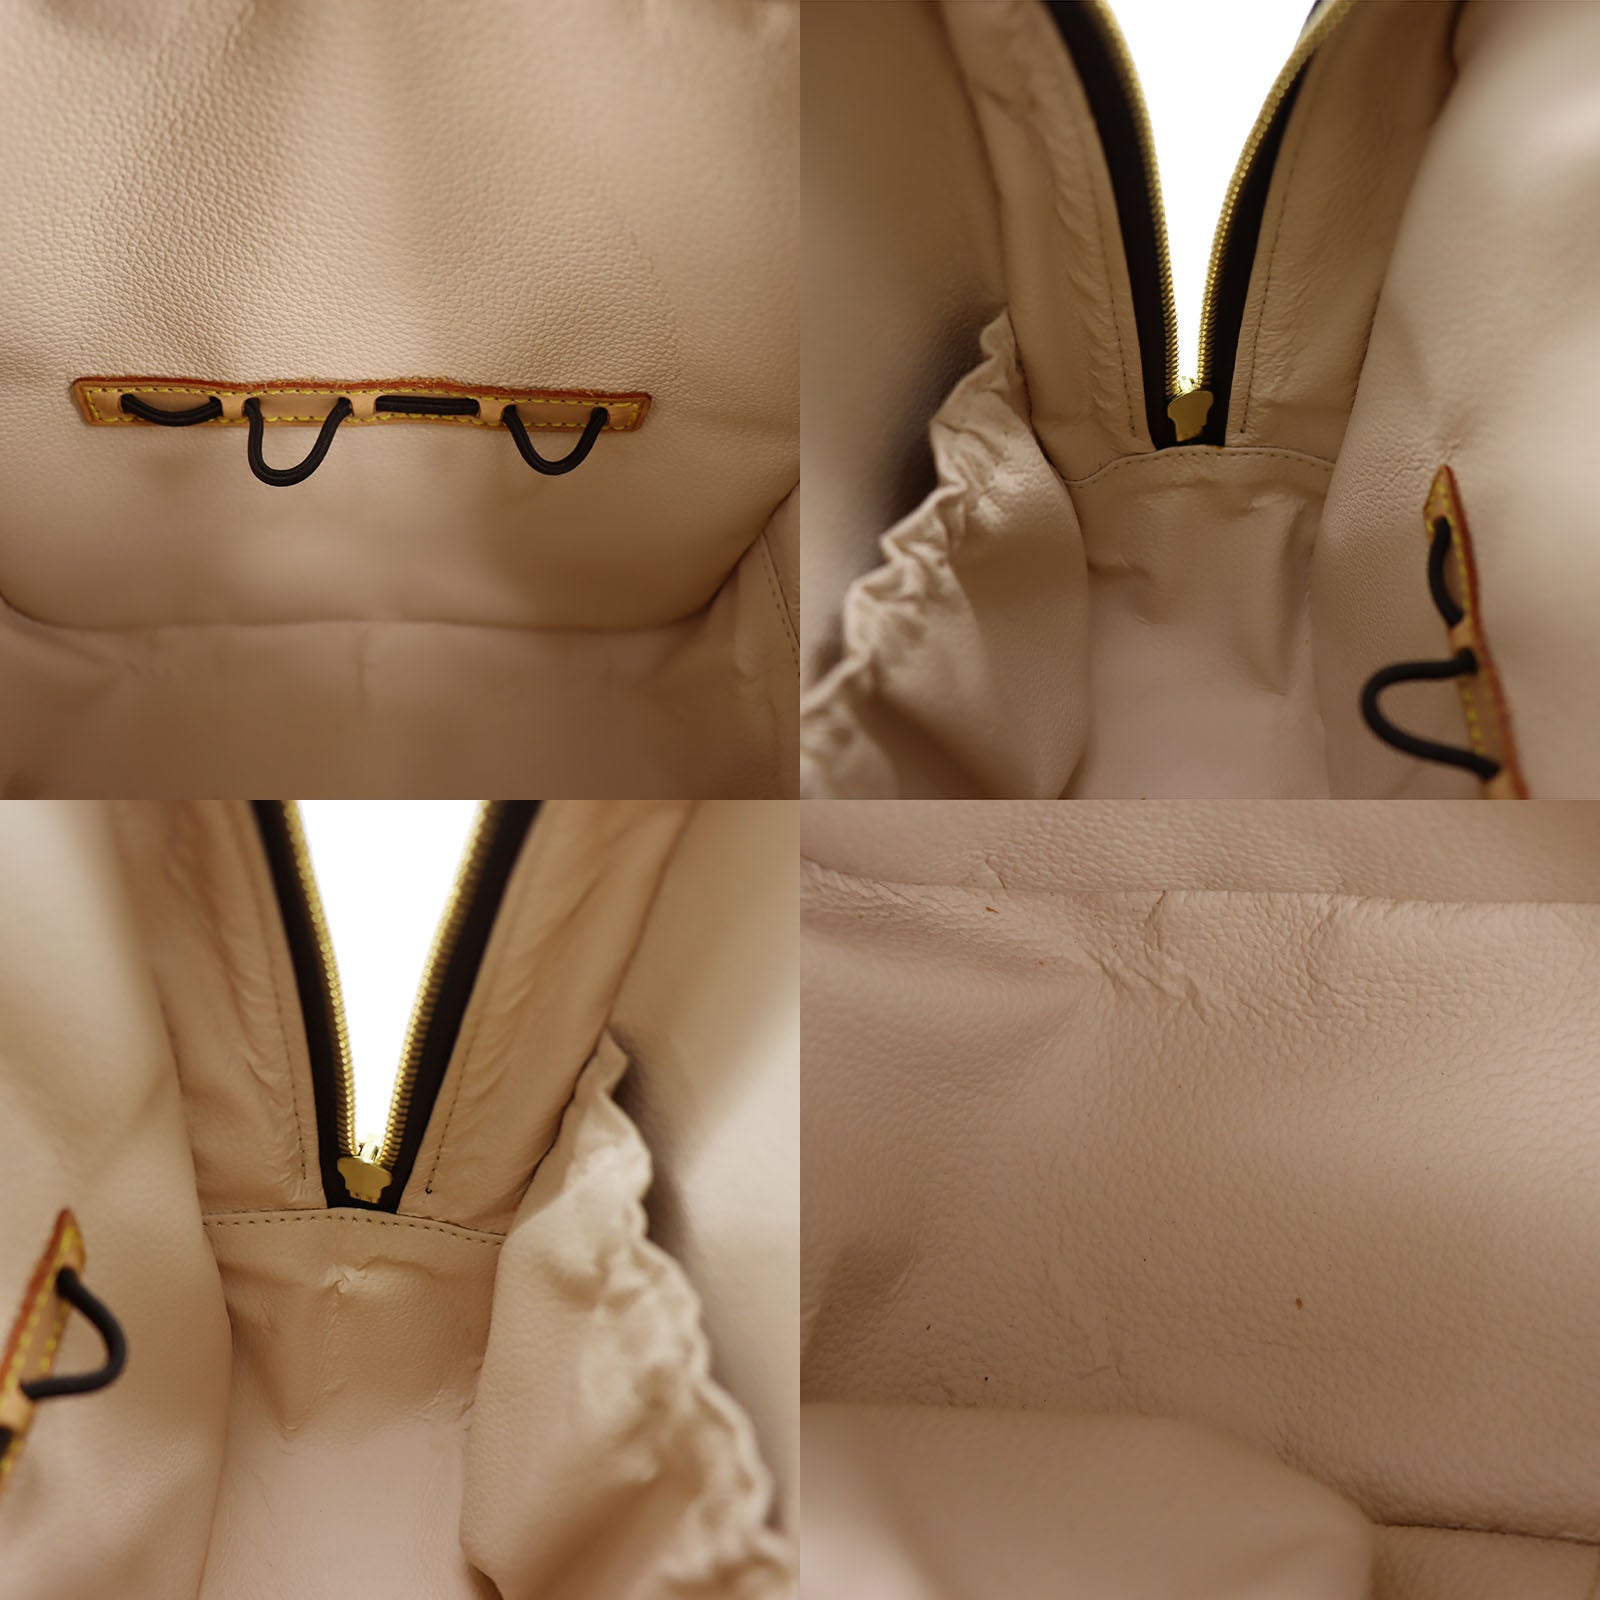 PRELOVED Louis Vuitton Monogram Spontini Handbag 071423 $50 OFF